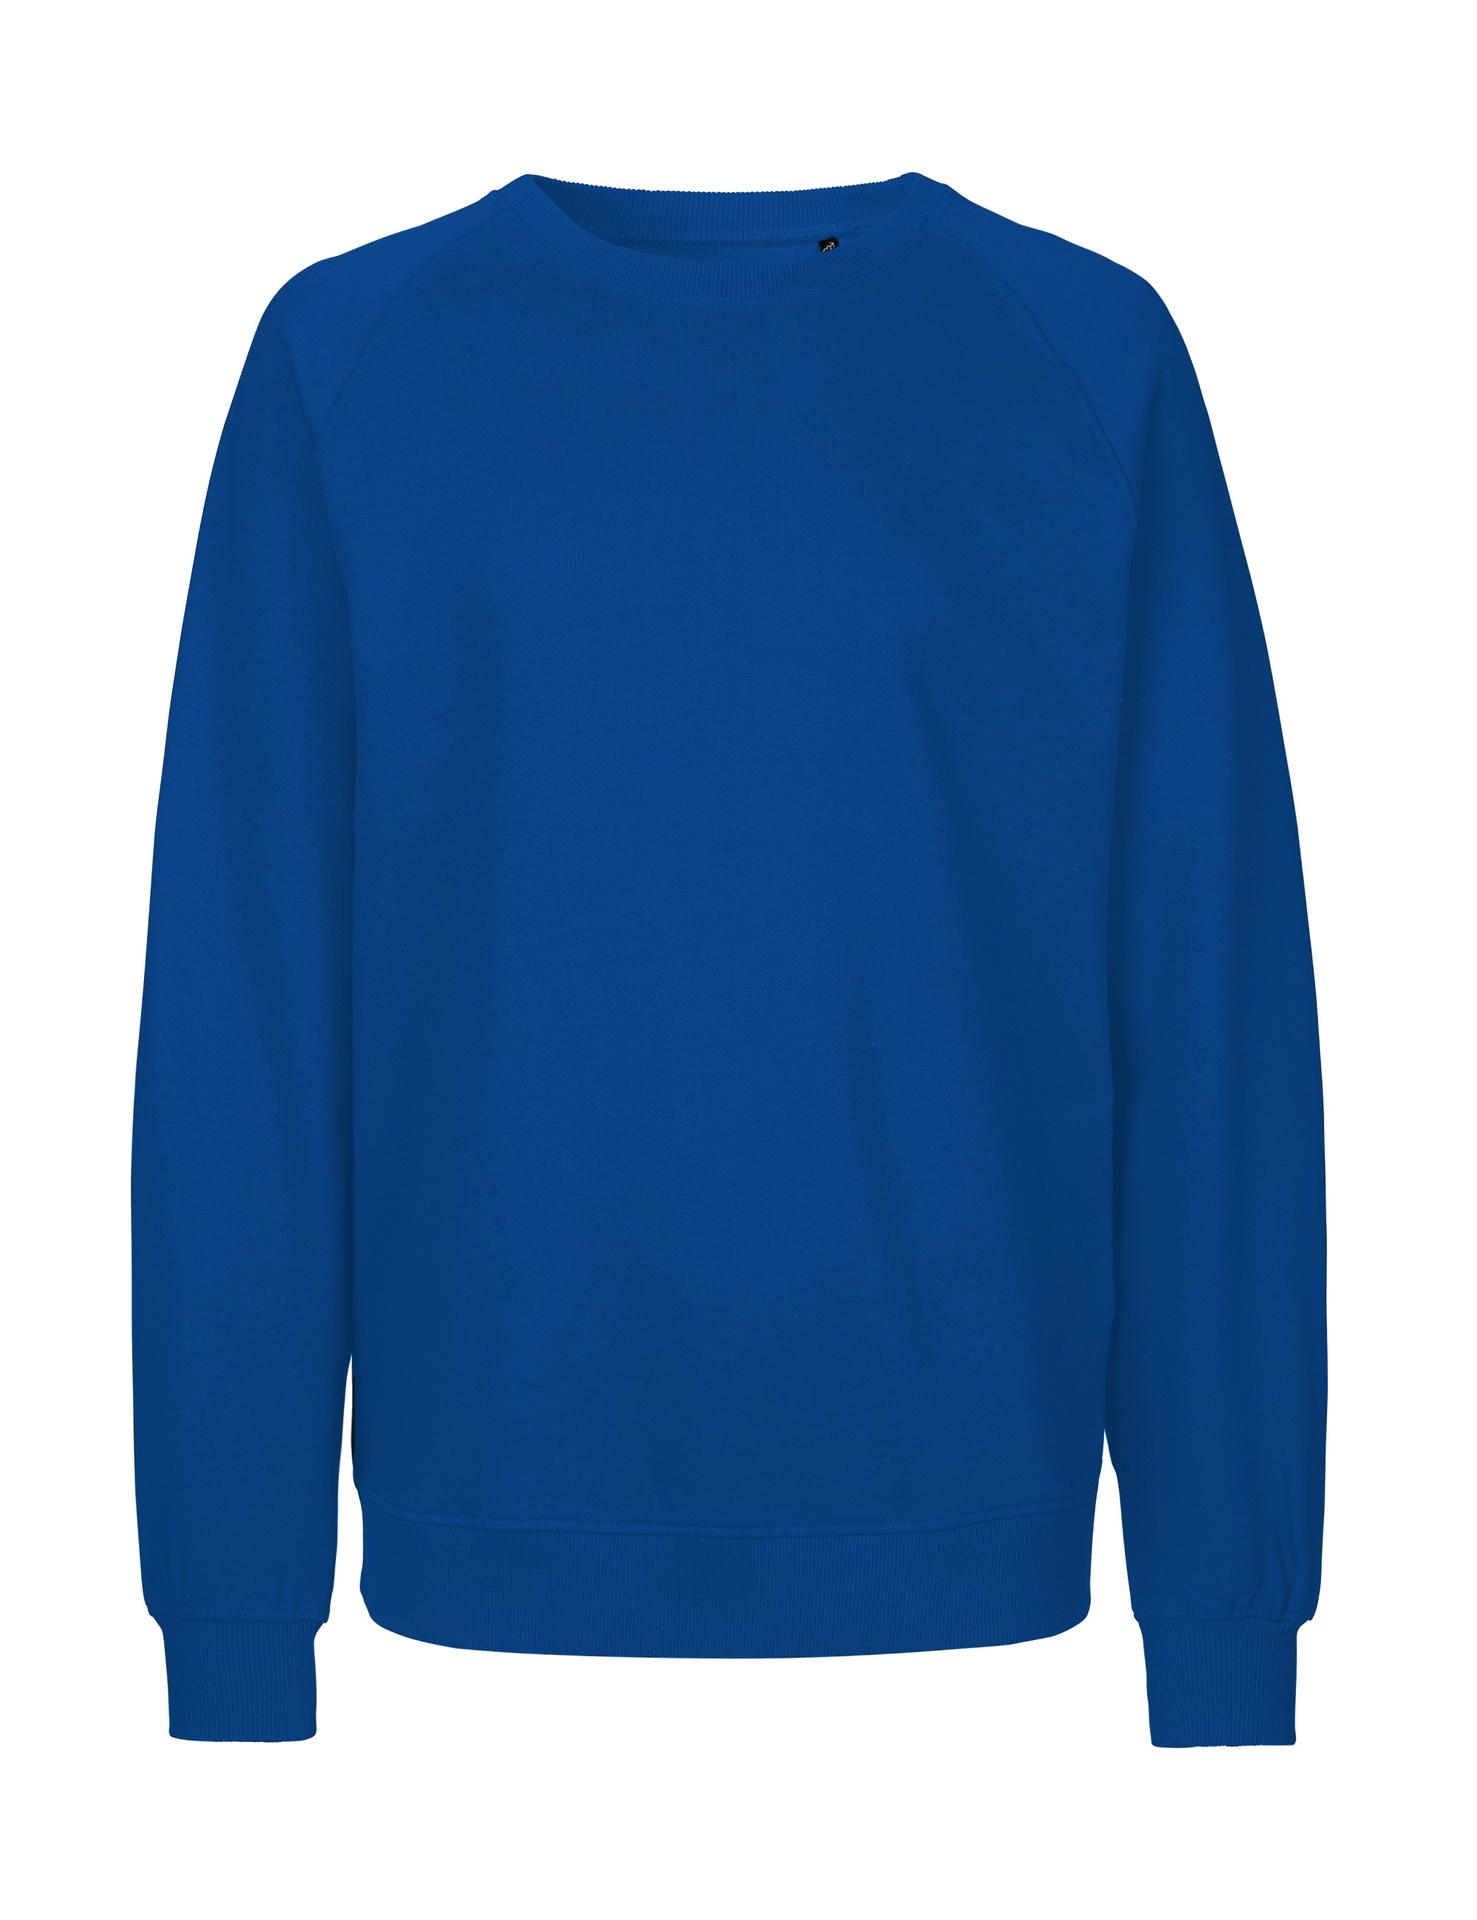 [PR/02859] Unisex Sweatshirt (Royal 51, XS)